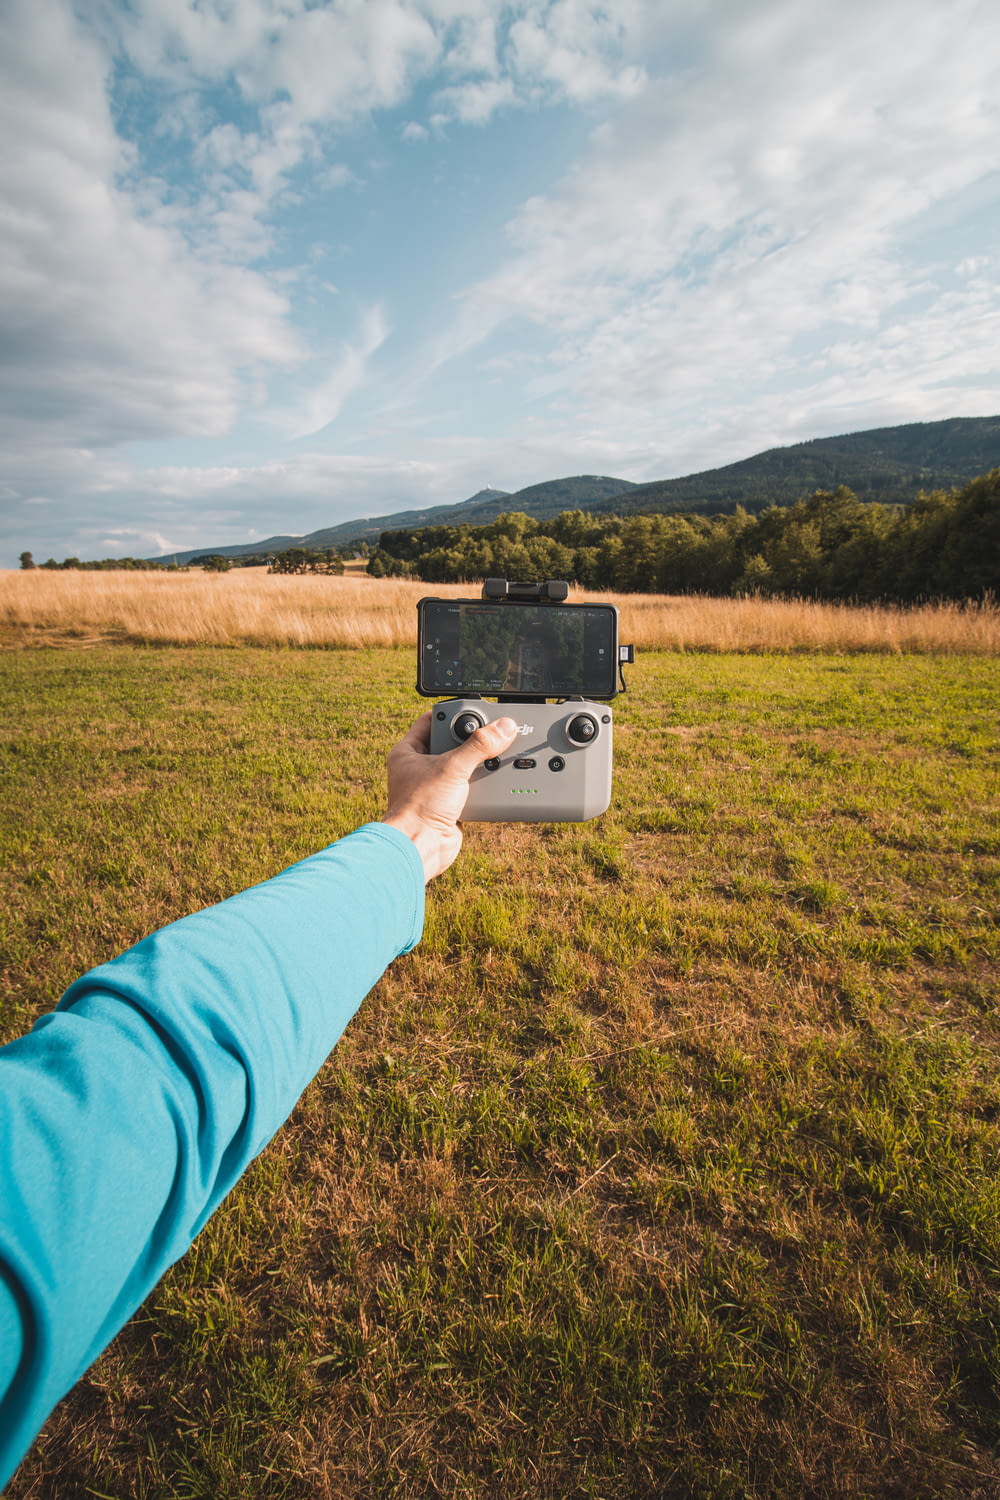 a person holding a remote control in a field